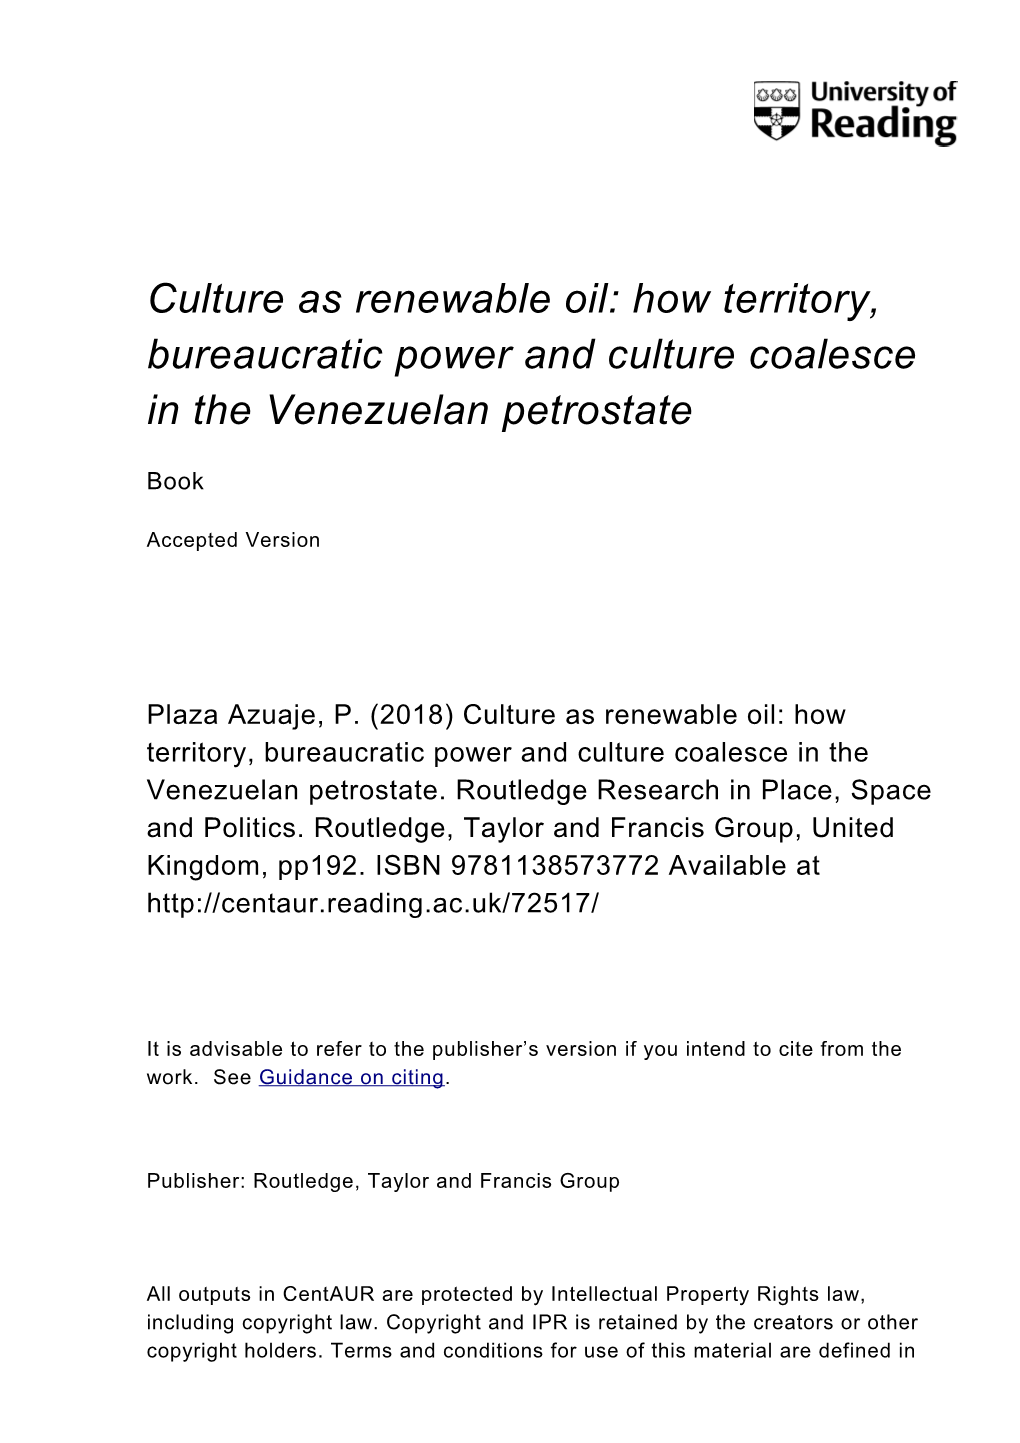 How Territory, Bureaucratic Power and Culture Coalesce in the Venezuelan Petrostate